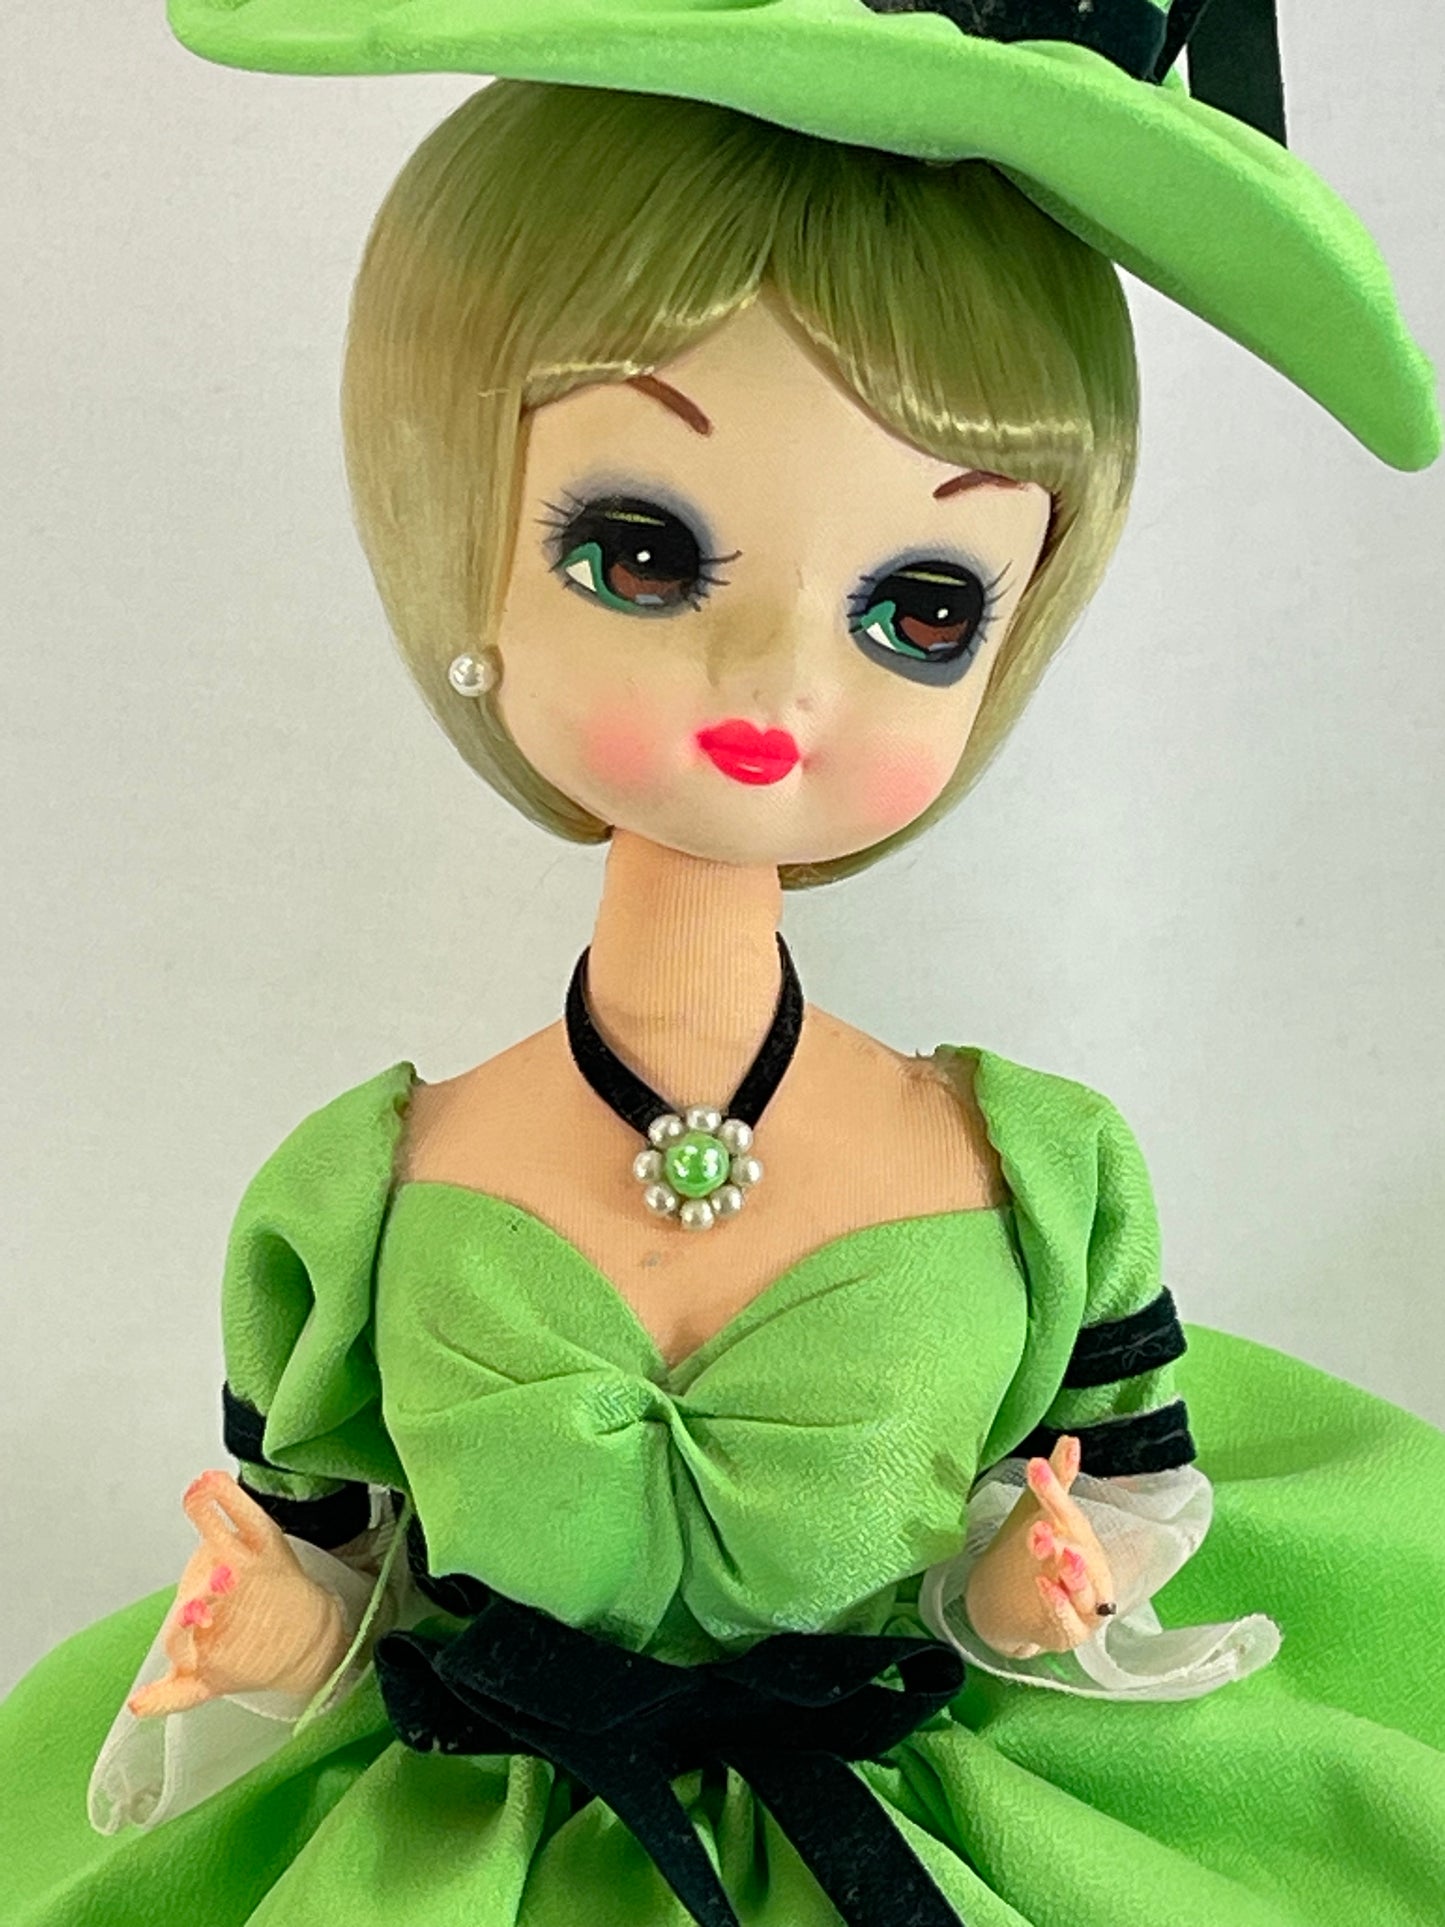 70s Bradley Doll Green Dress